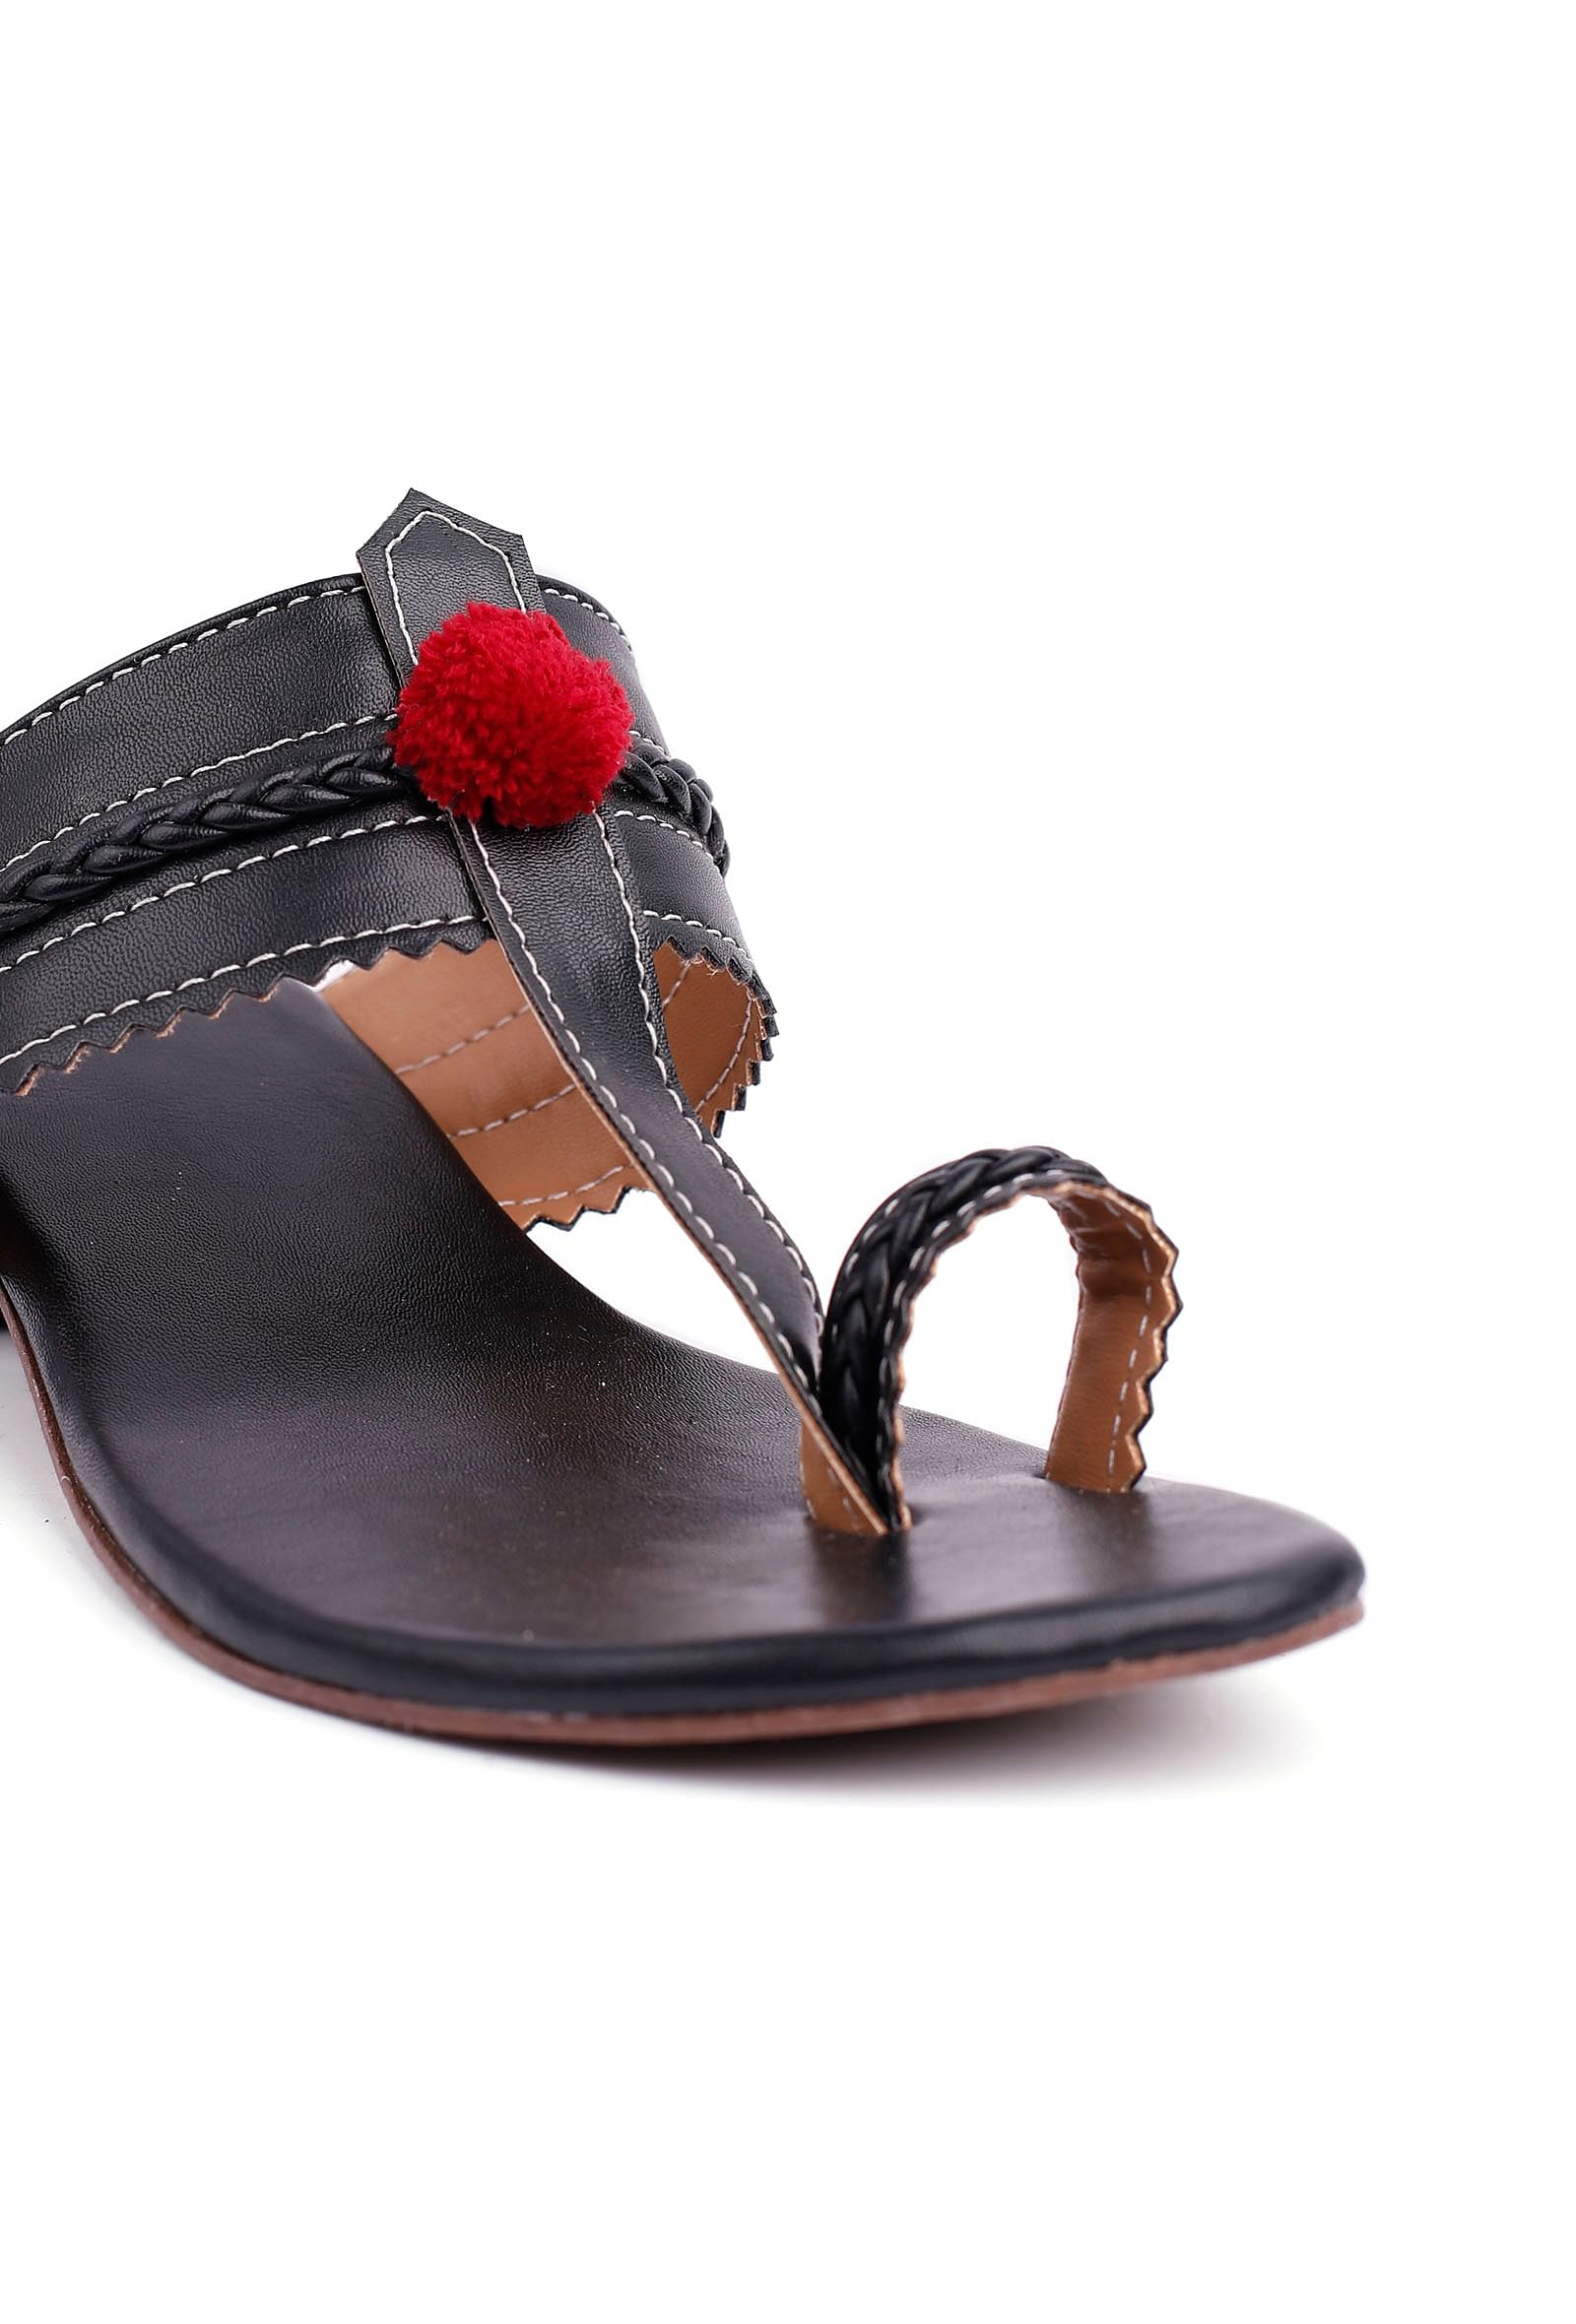 Maya Black Cruelty Free Leather Heels Sandals